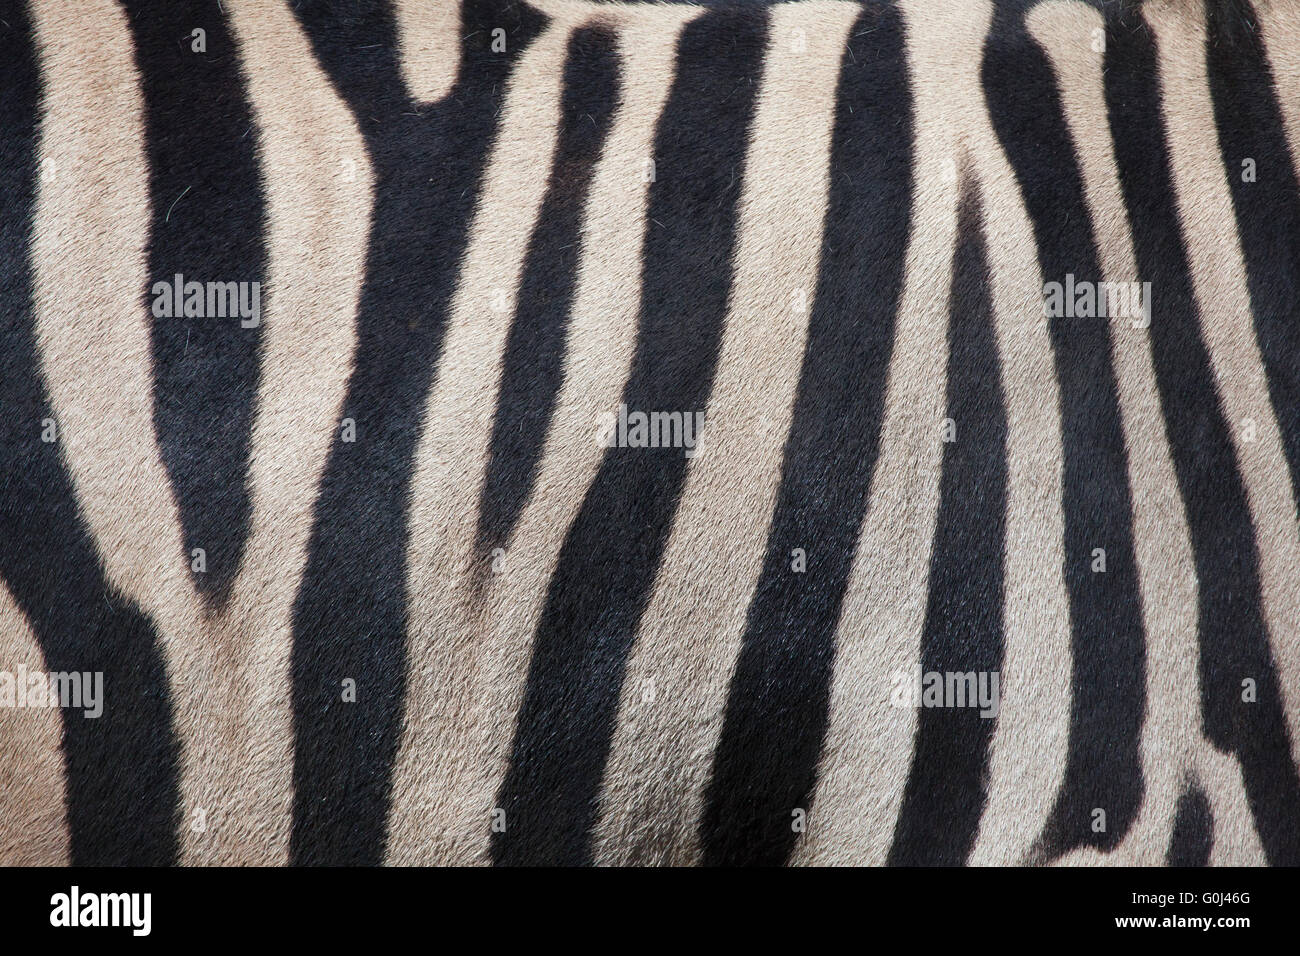 Burchell's zebra (Equus quagga burchellii), also known as the Damara zebra. Skin texture. Wild life animal. Stock Photo